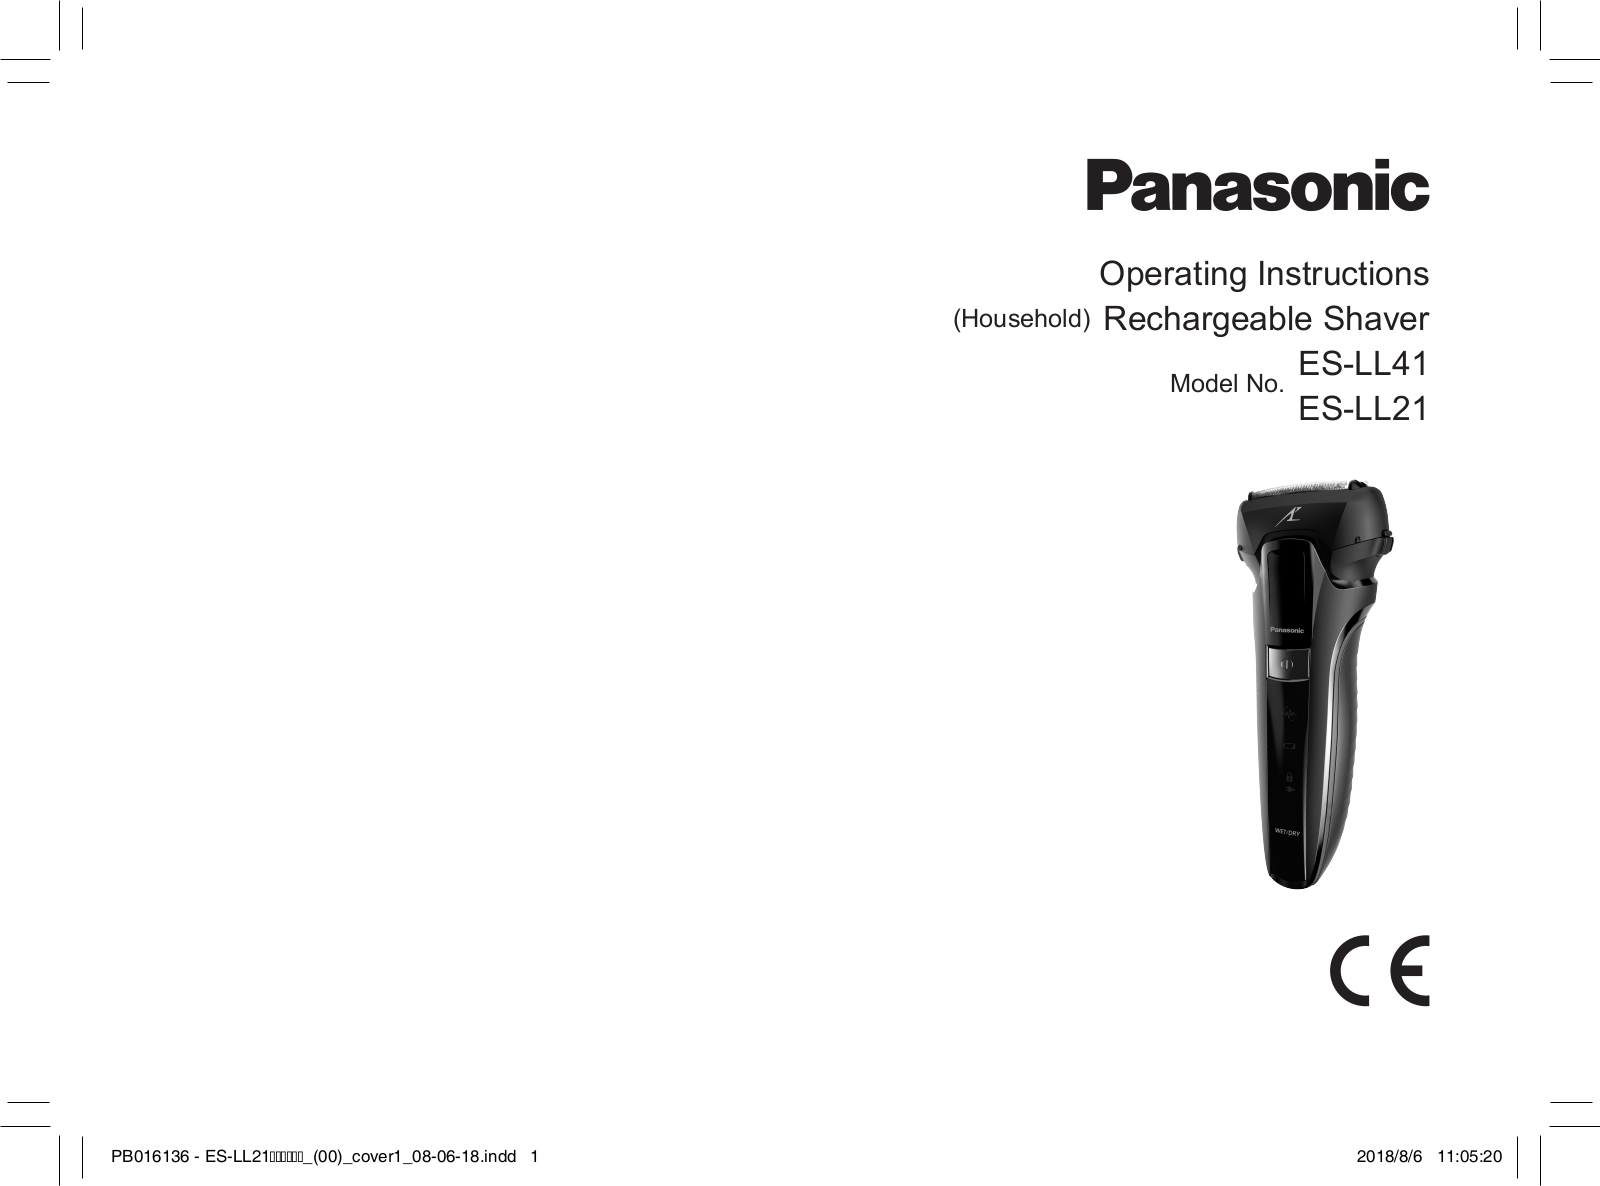 Panasonic es-ll21 Operation Manual